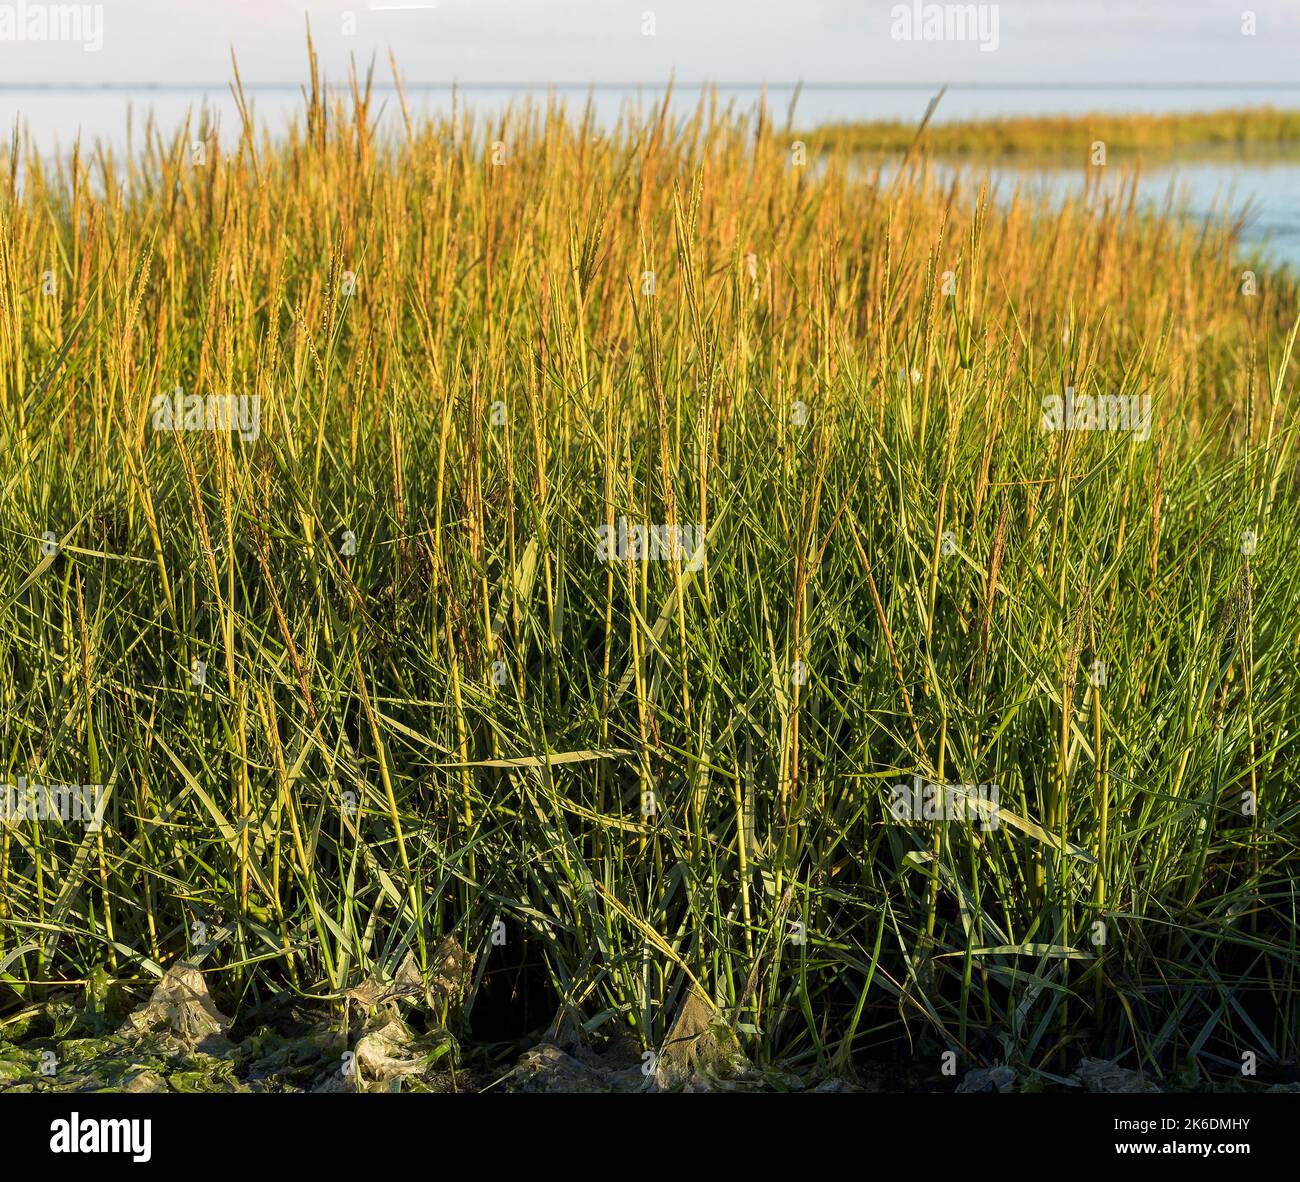 Cordgrass (Spartina x townsendii) at Vesterende, Ballum (part of Wadden Sea National Park), south-.western Jylland, Denmark. Stock Photo